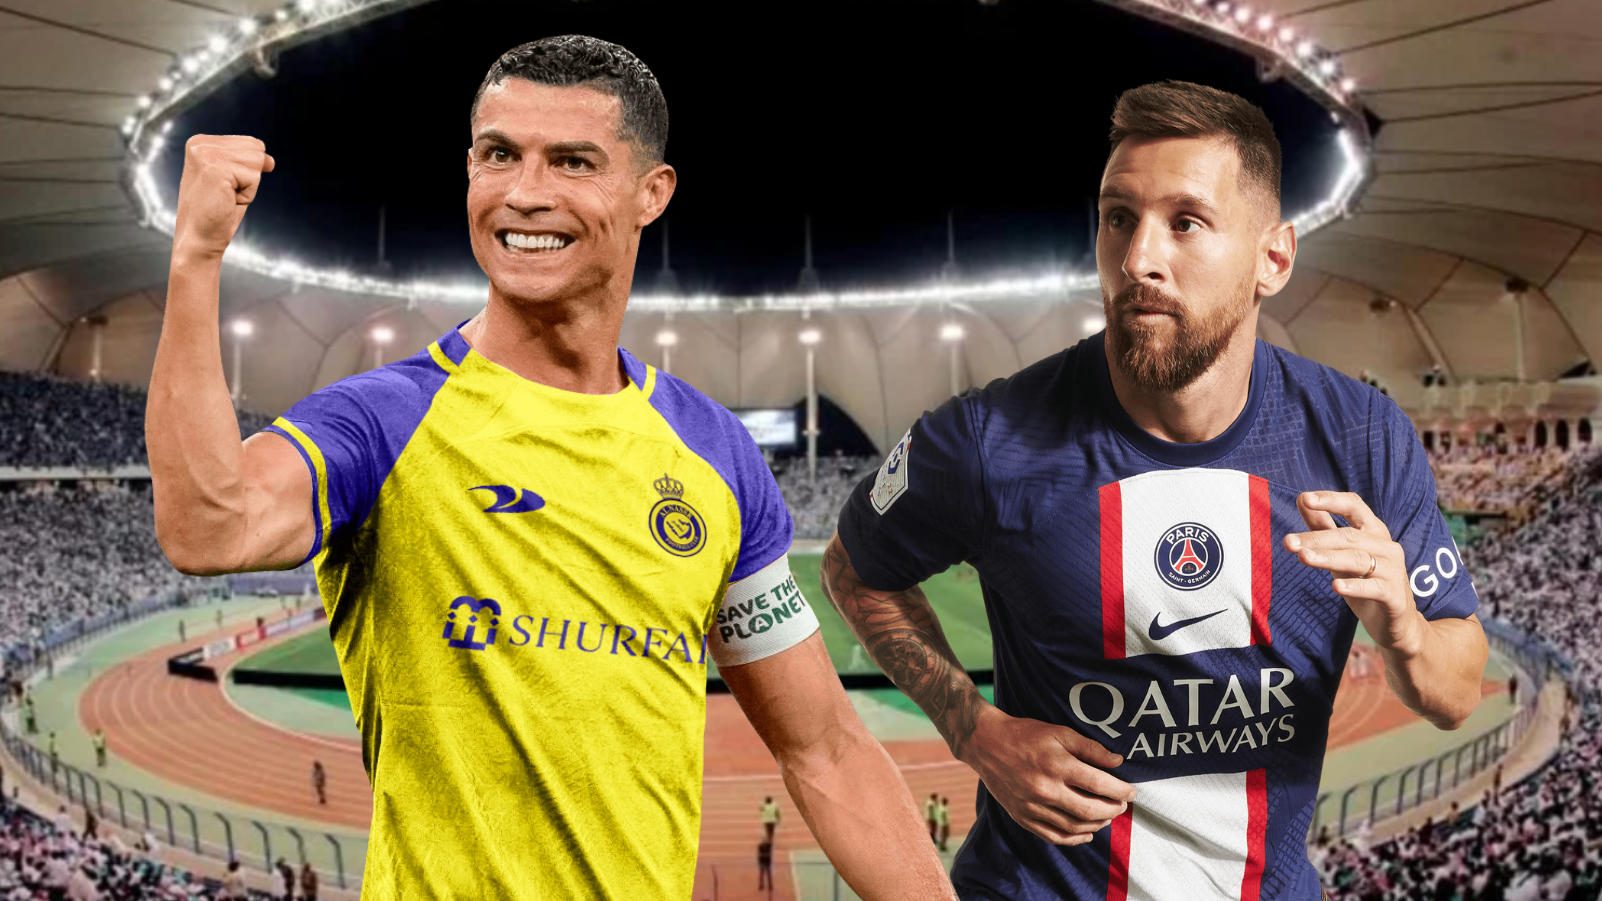 Vuitton Scores Big With Cristiano Ronaldo and Lionel Messi